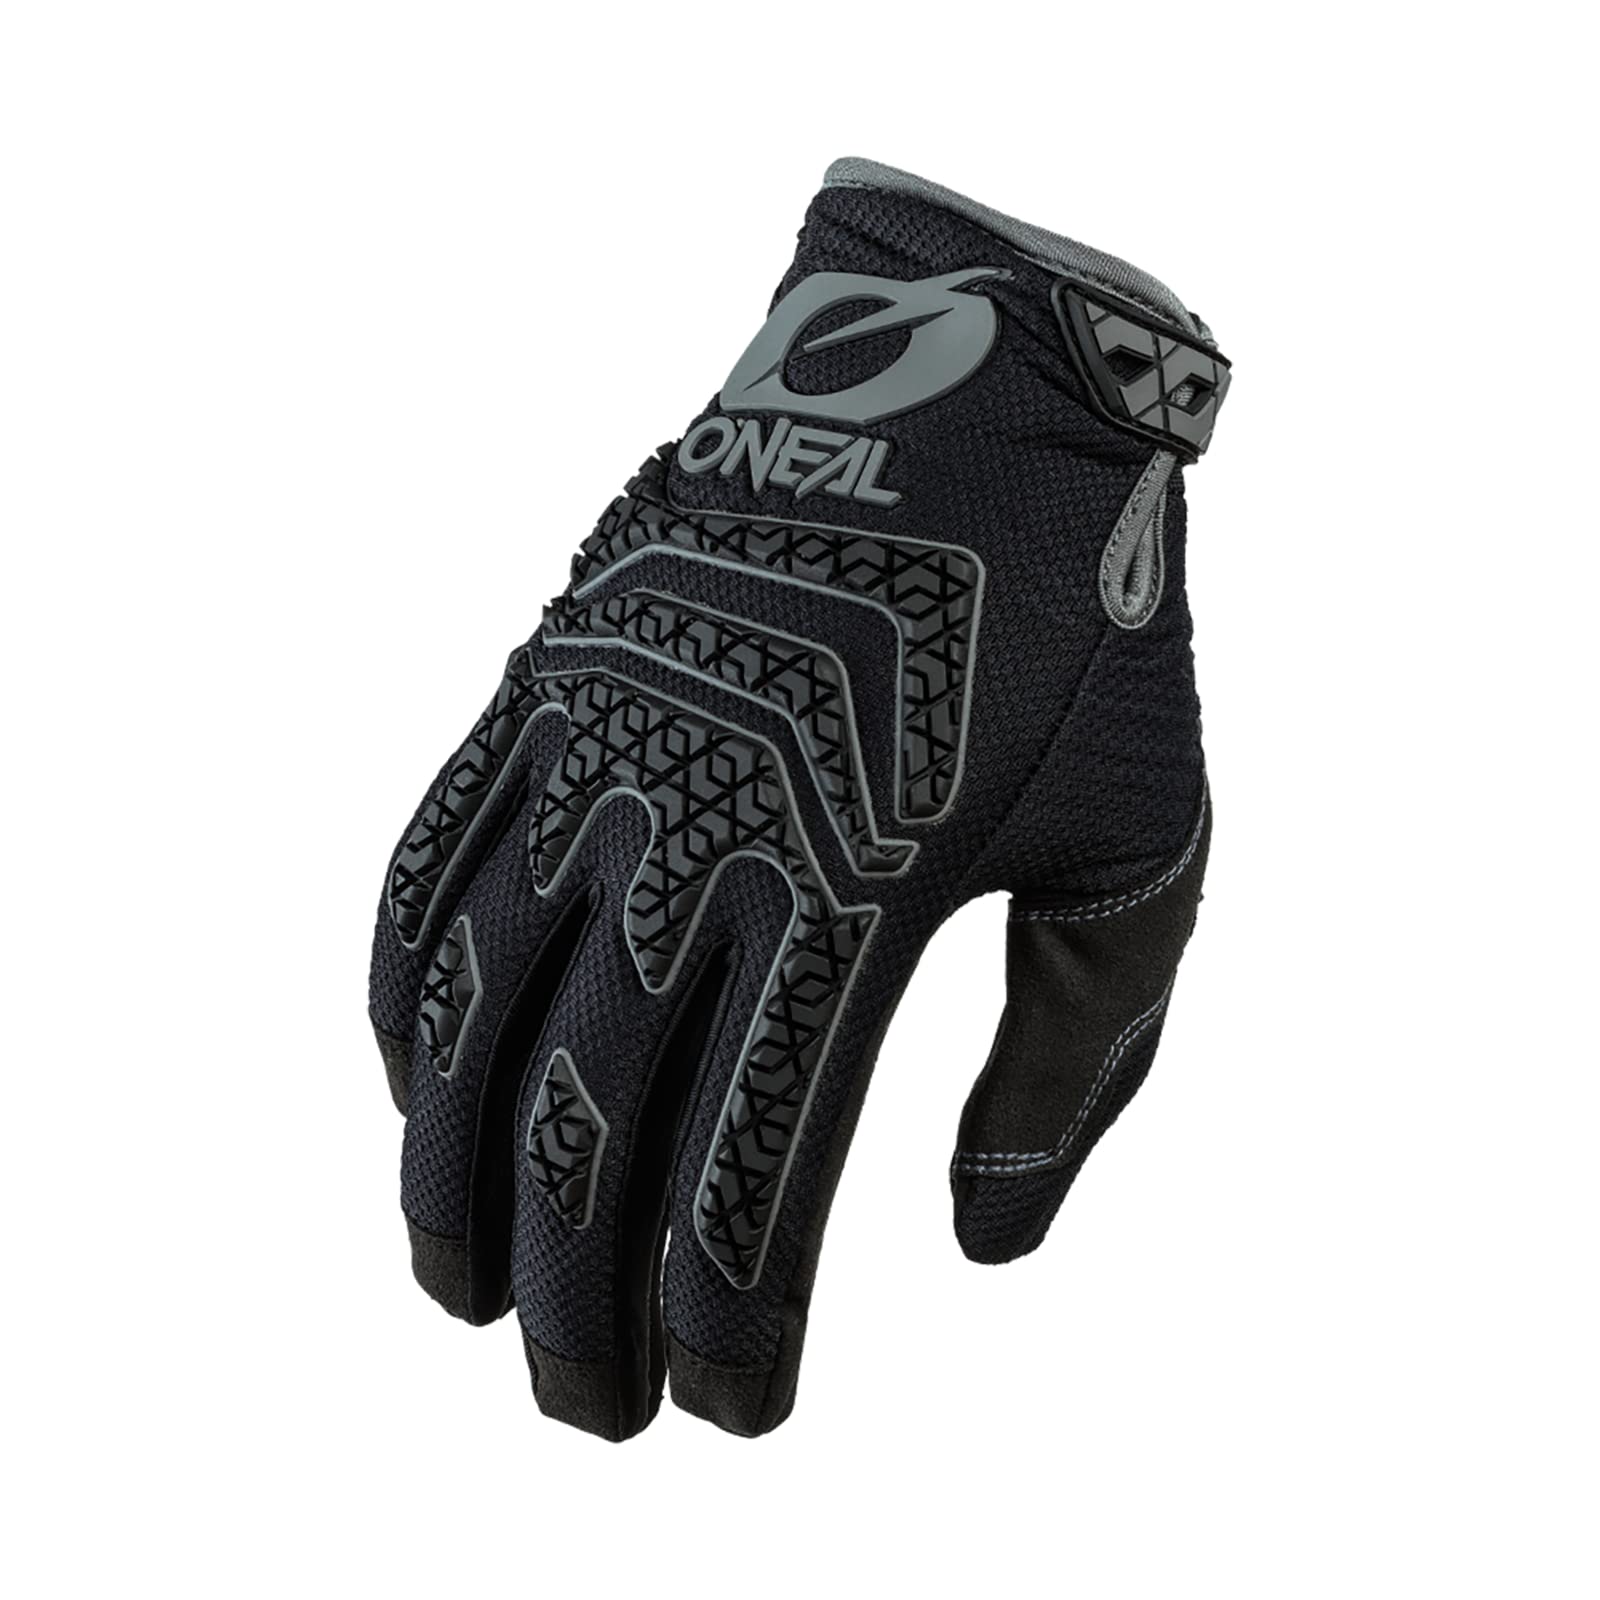 O'NEAL | Fahrrad- & Motocross-Handschuhe | MX MTB DH FR Downhill Freeride | Langlebige, Flexible Materialien, Silikonprint für Grip | Sniper Elite Glove | Erwachsene | Schwarz Grau | Größe XL von O'NEAL